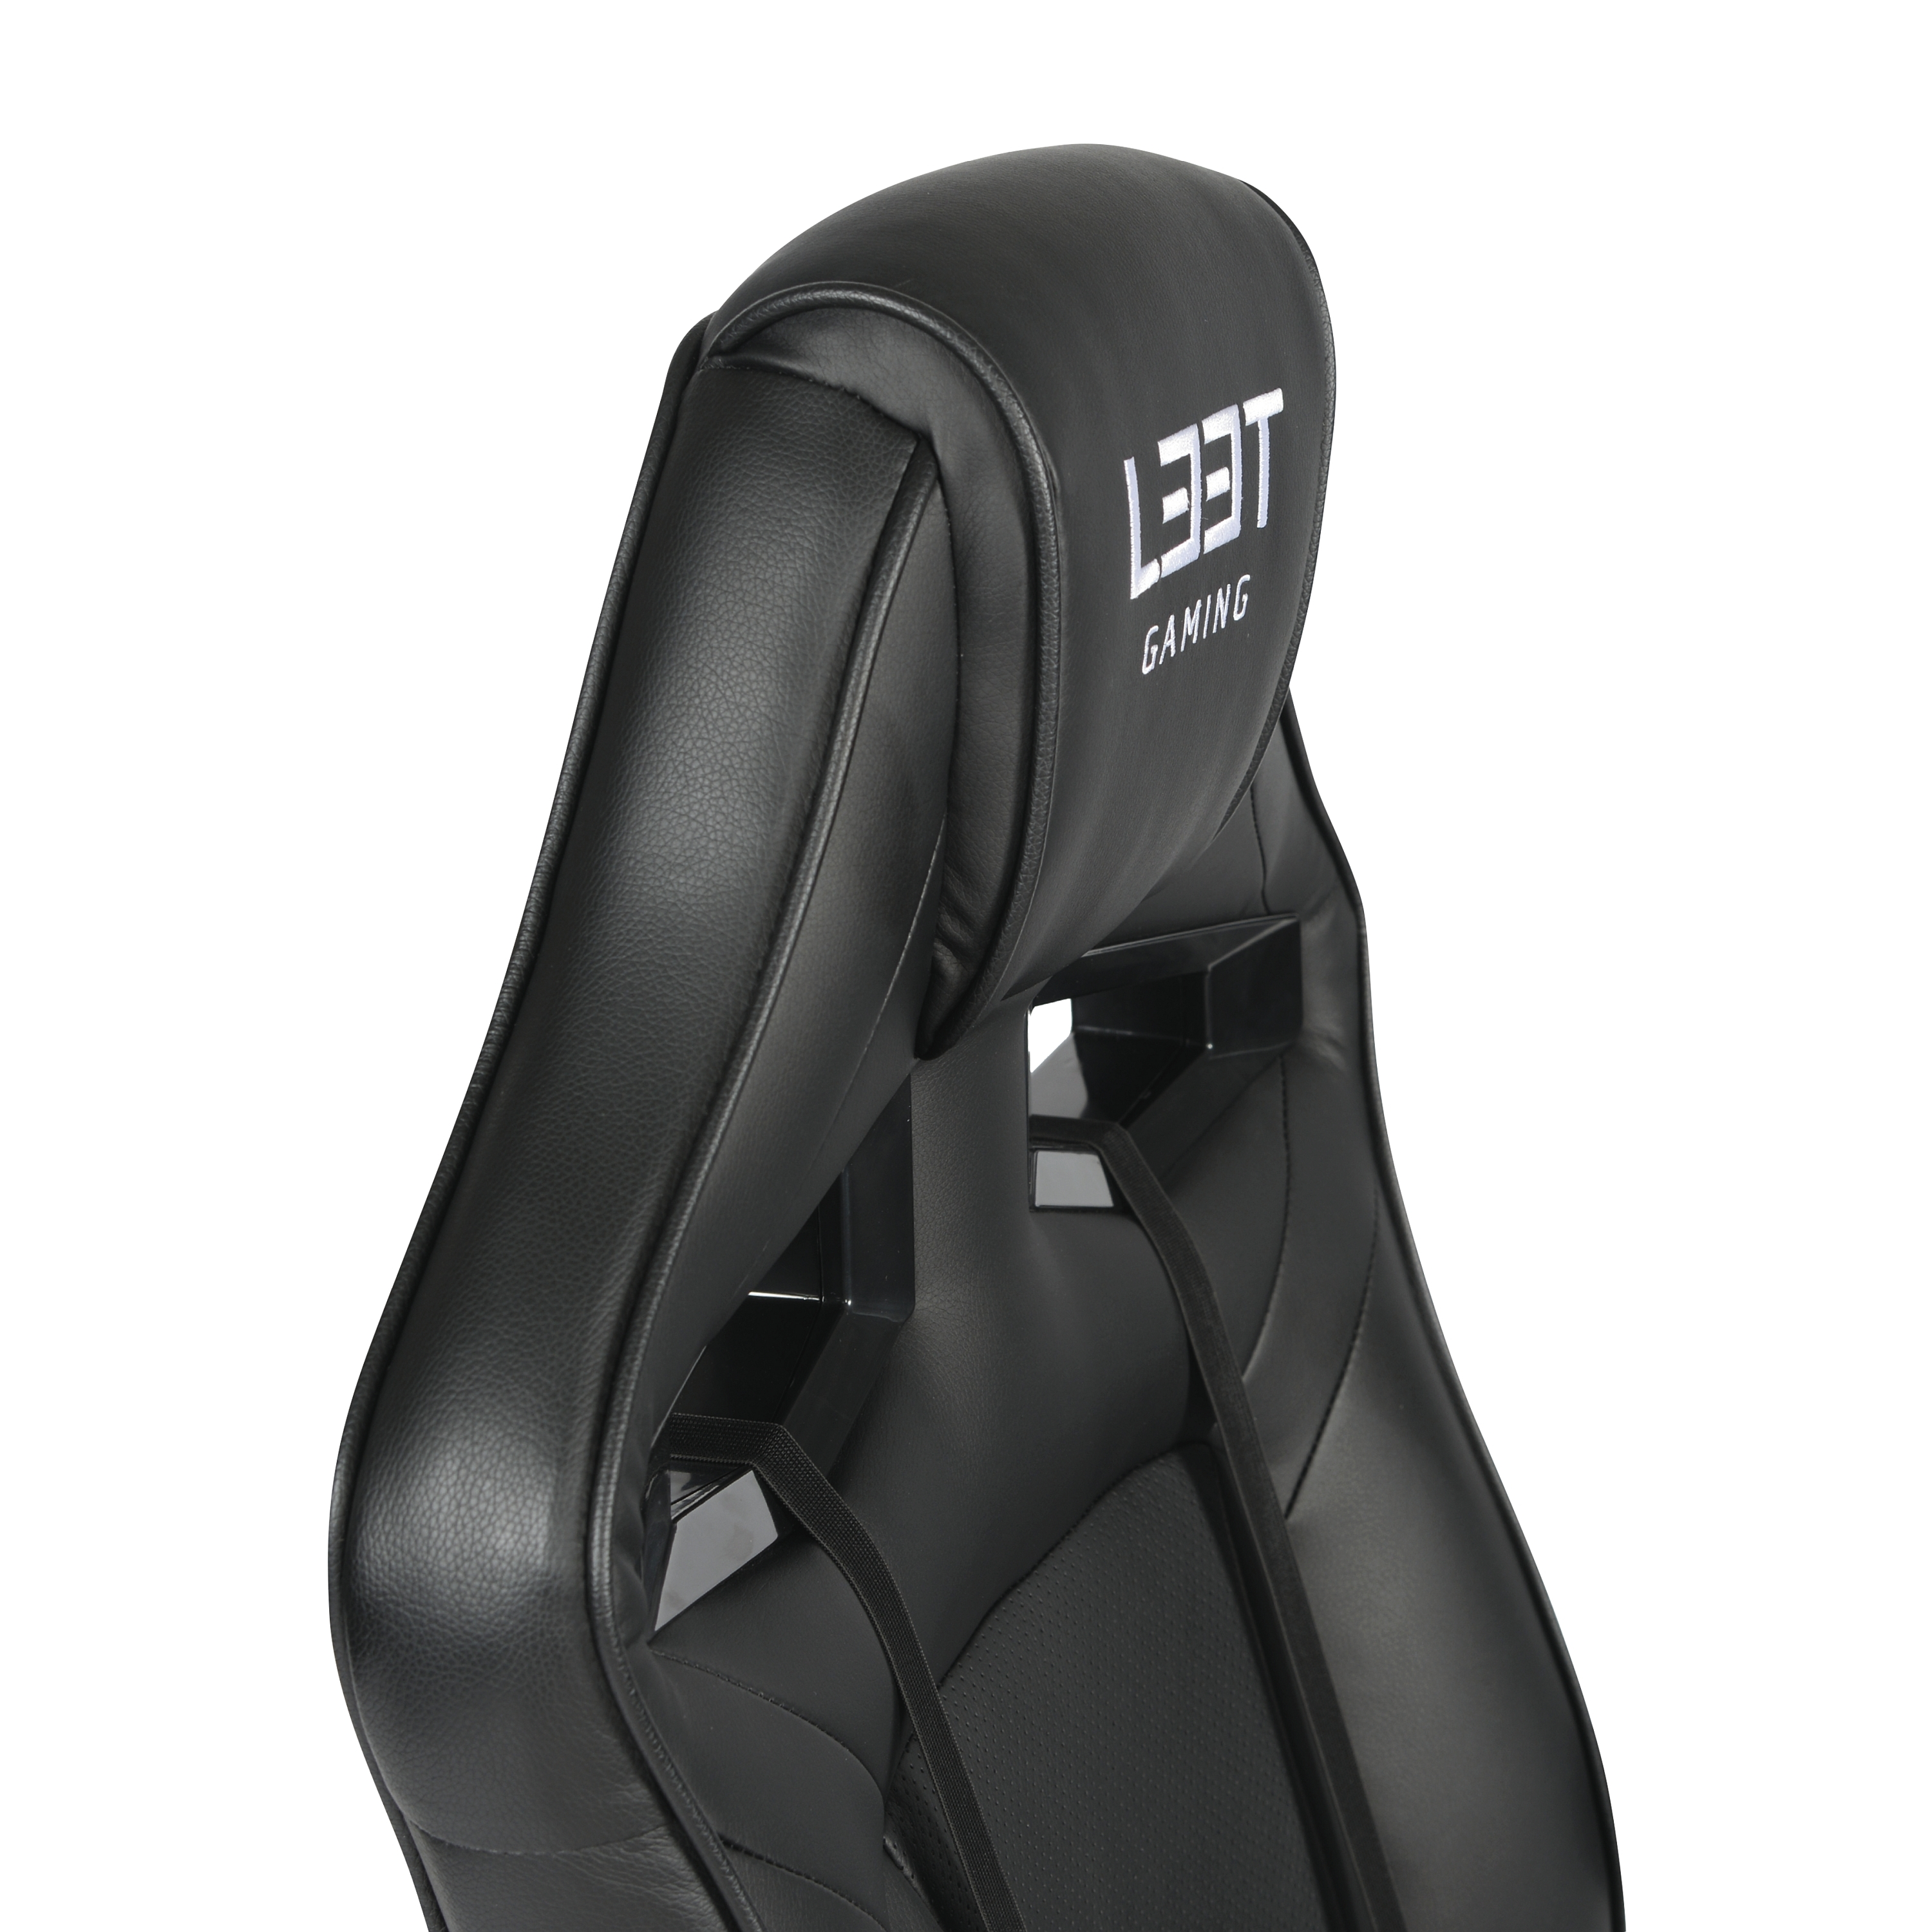 L33T Stuhl, schwarz Gaming 160565